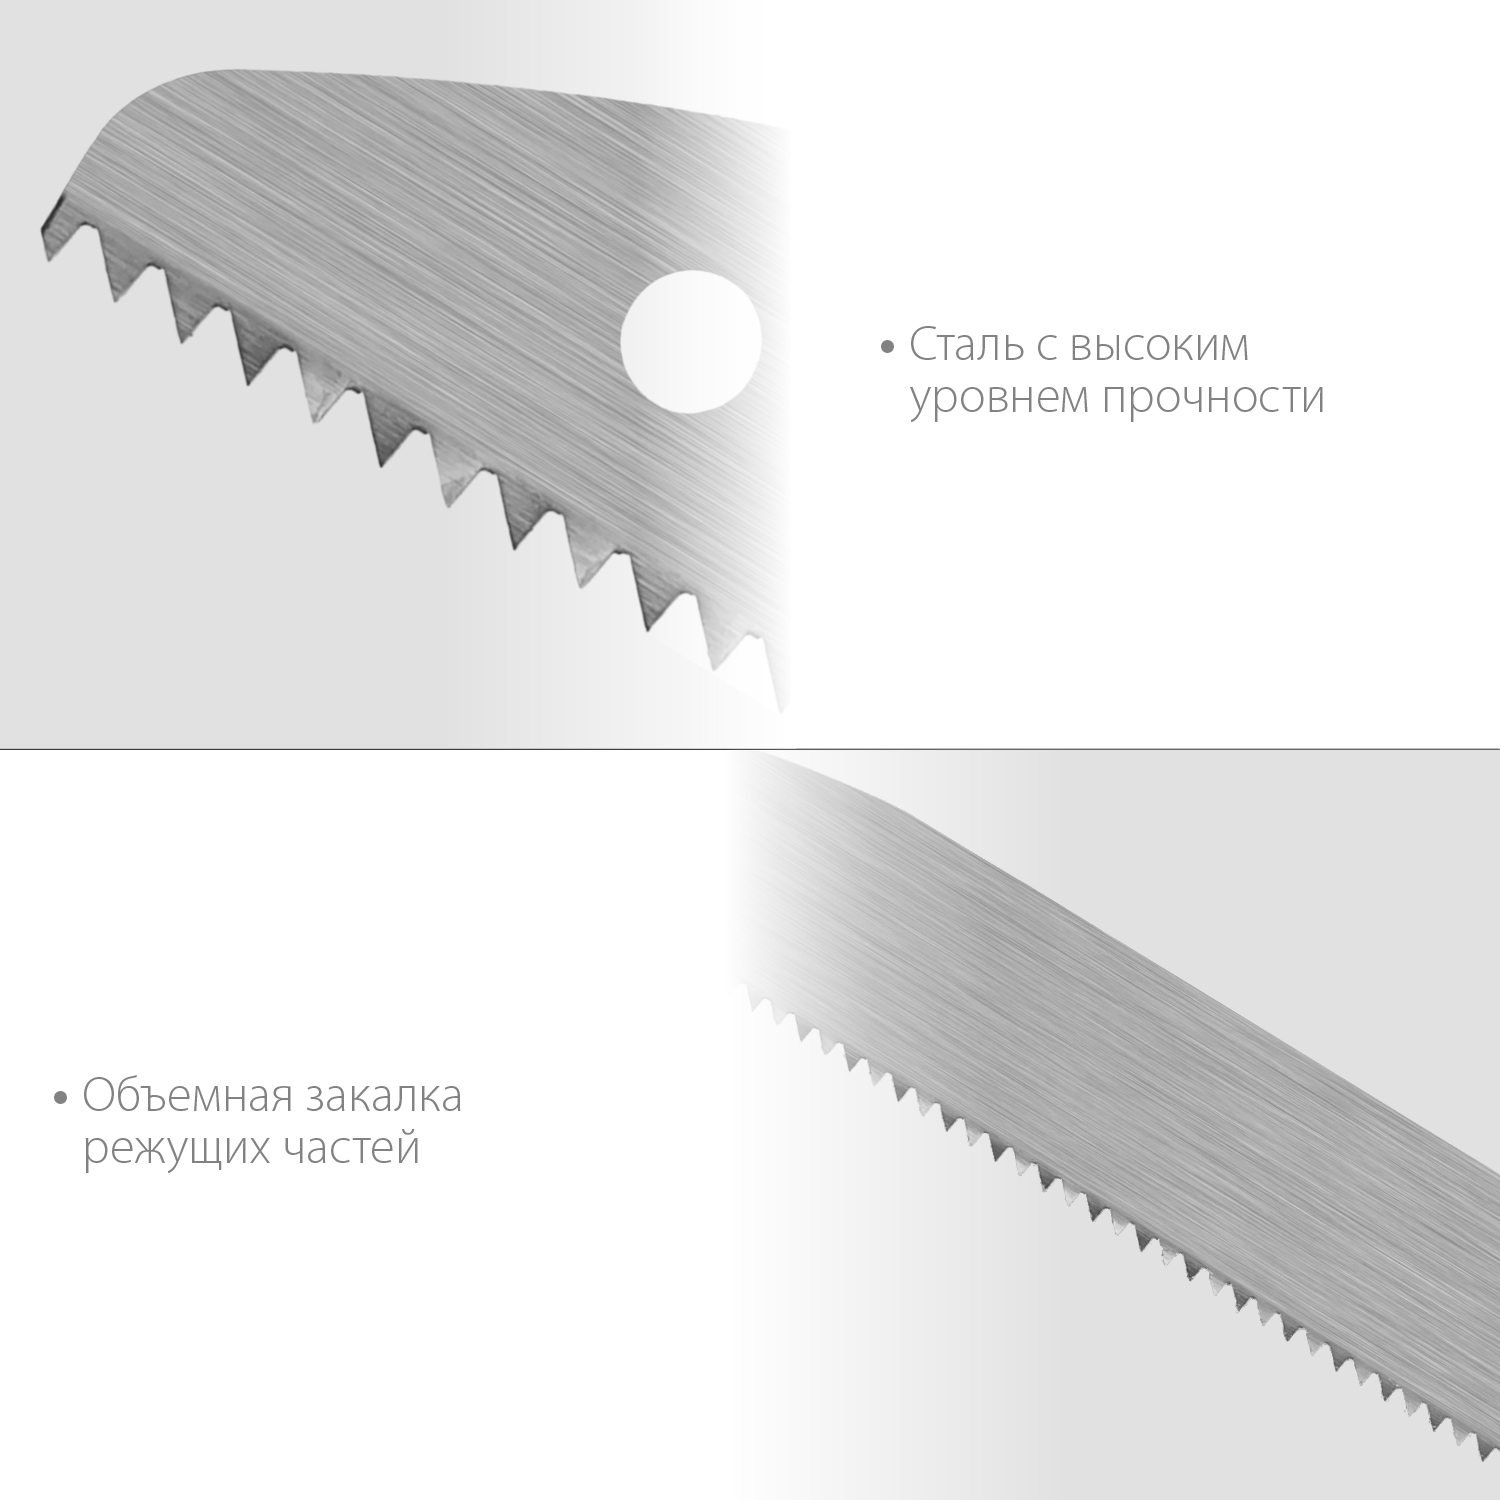 СИБИН 300 мм, садовая ножовка (15054)